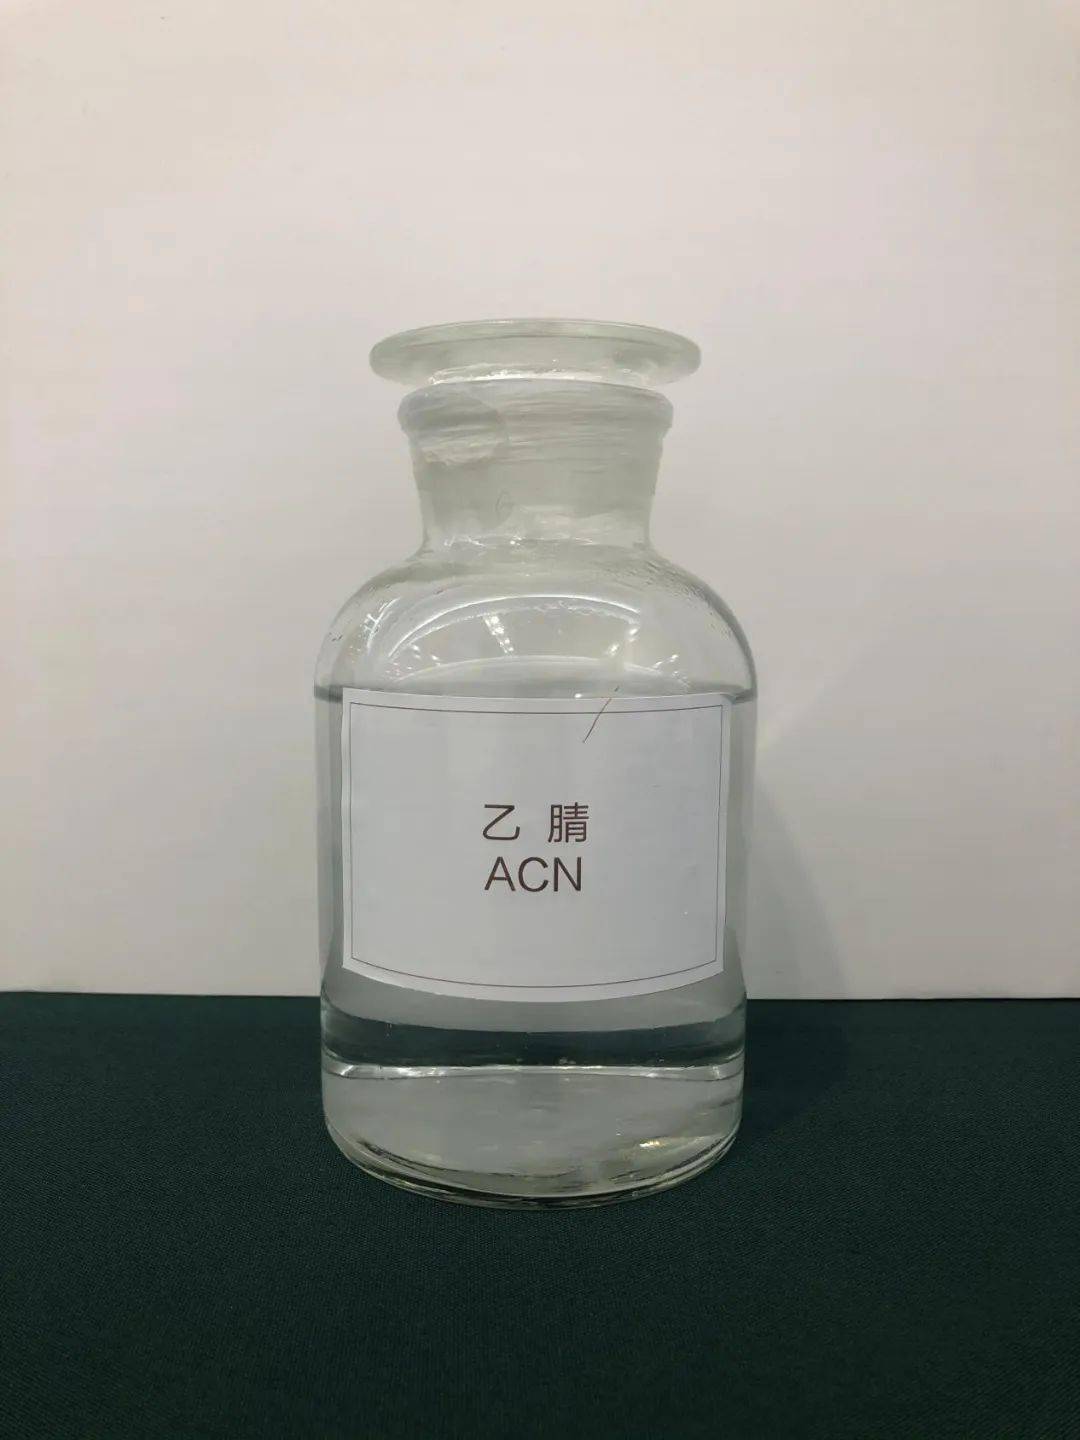 Acetonitrila (C2N3N): estrutura, uso e riscos